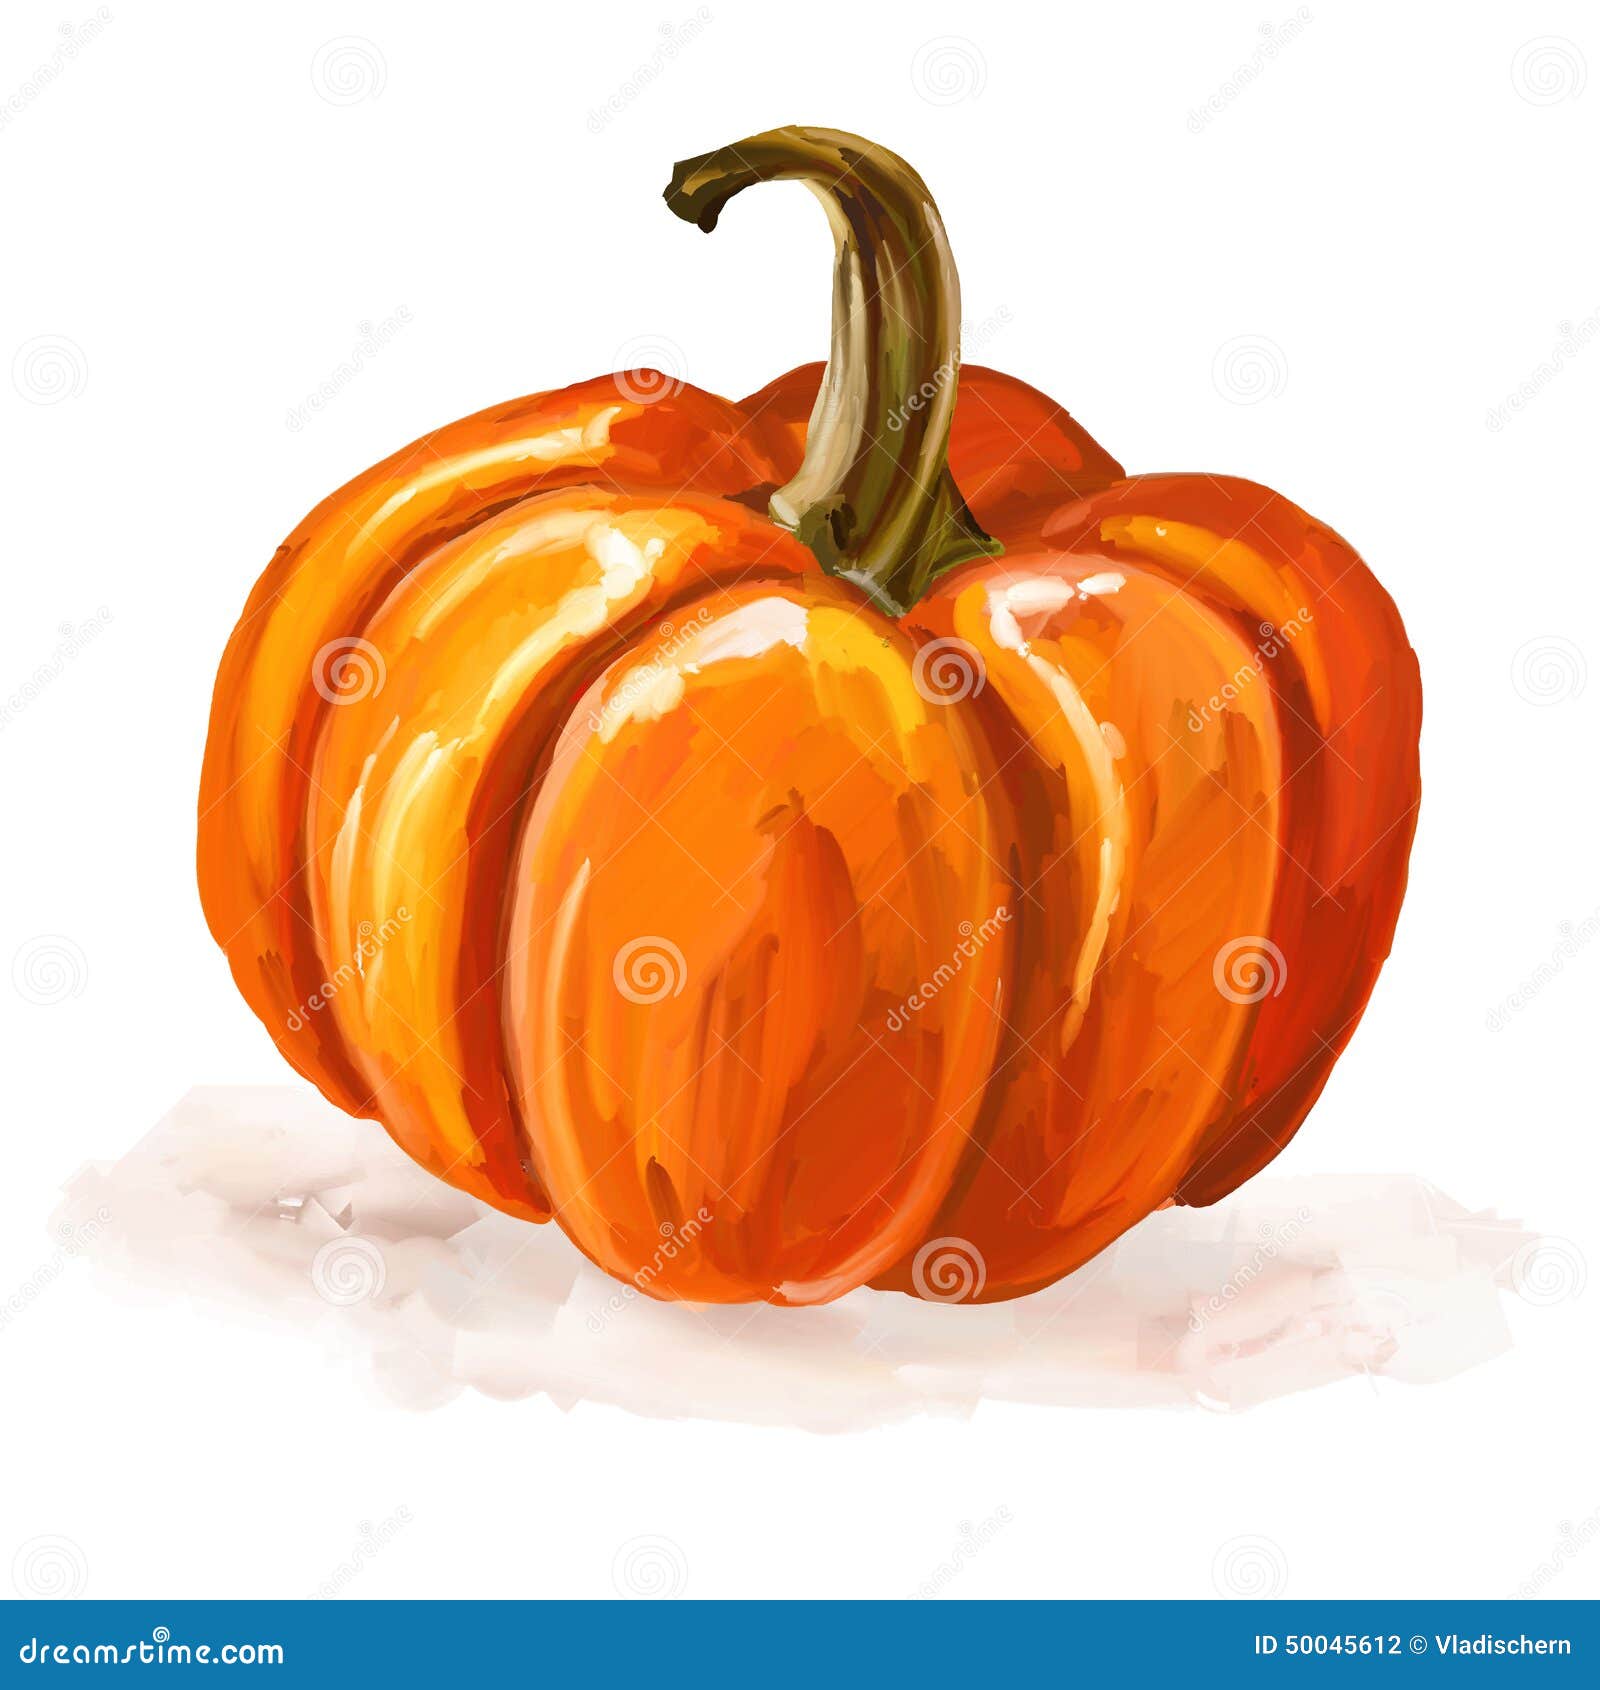 watercolor pumpkin clipart - photo #43